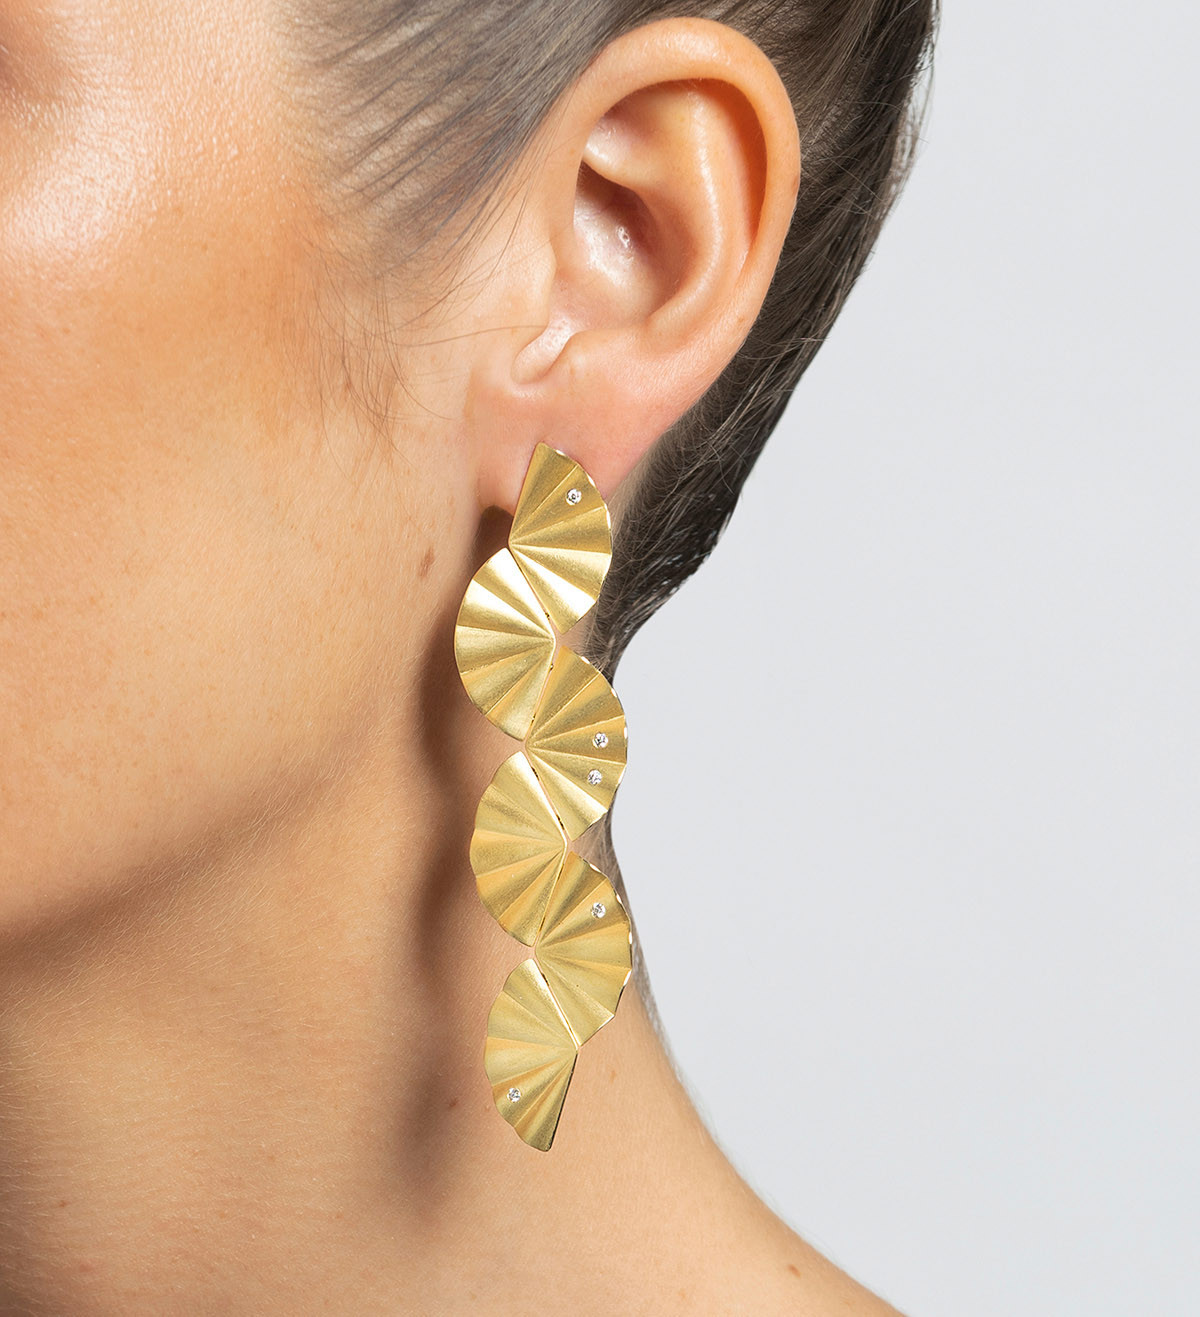 18k gold earrings Maiko with diamonds 0,15ct